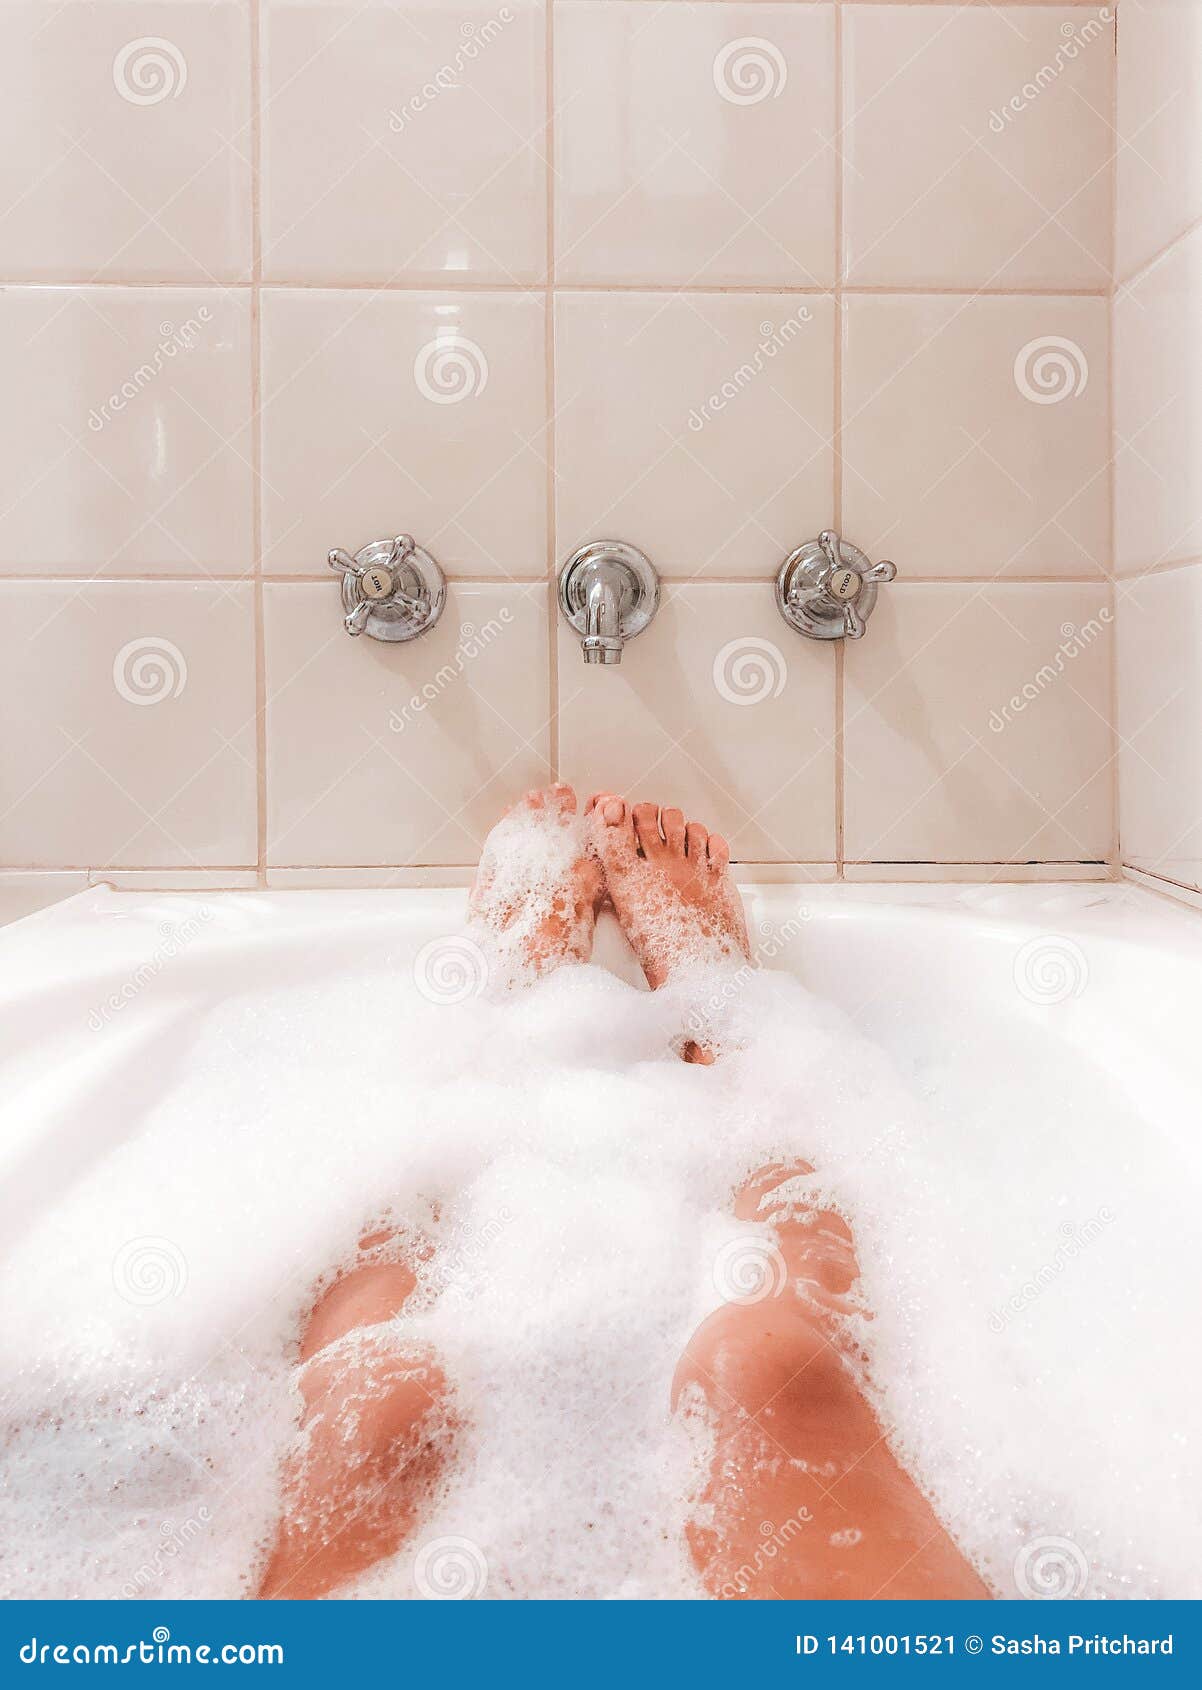 Bubble Bath Pics